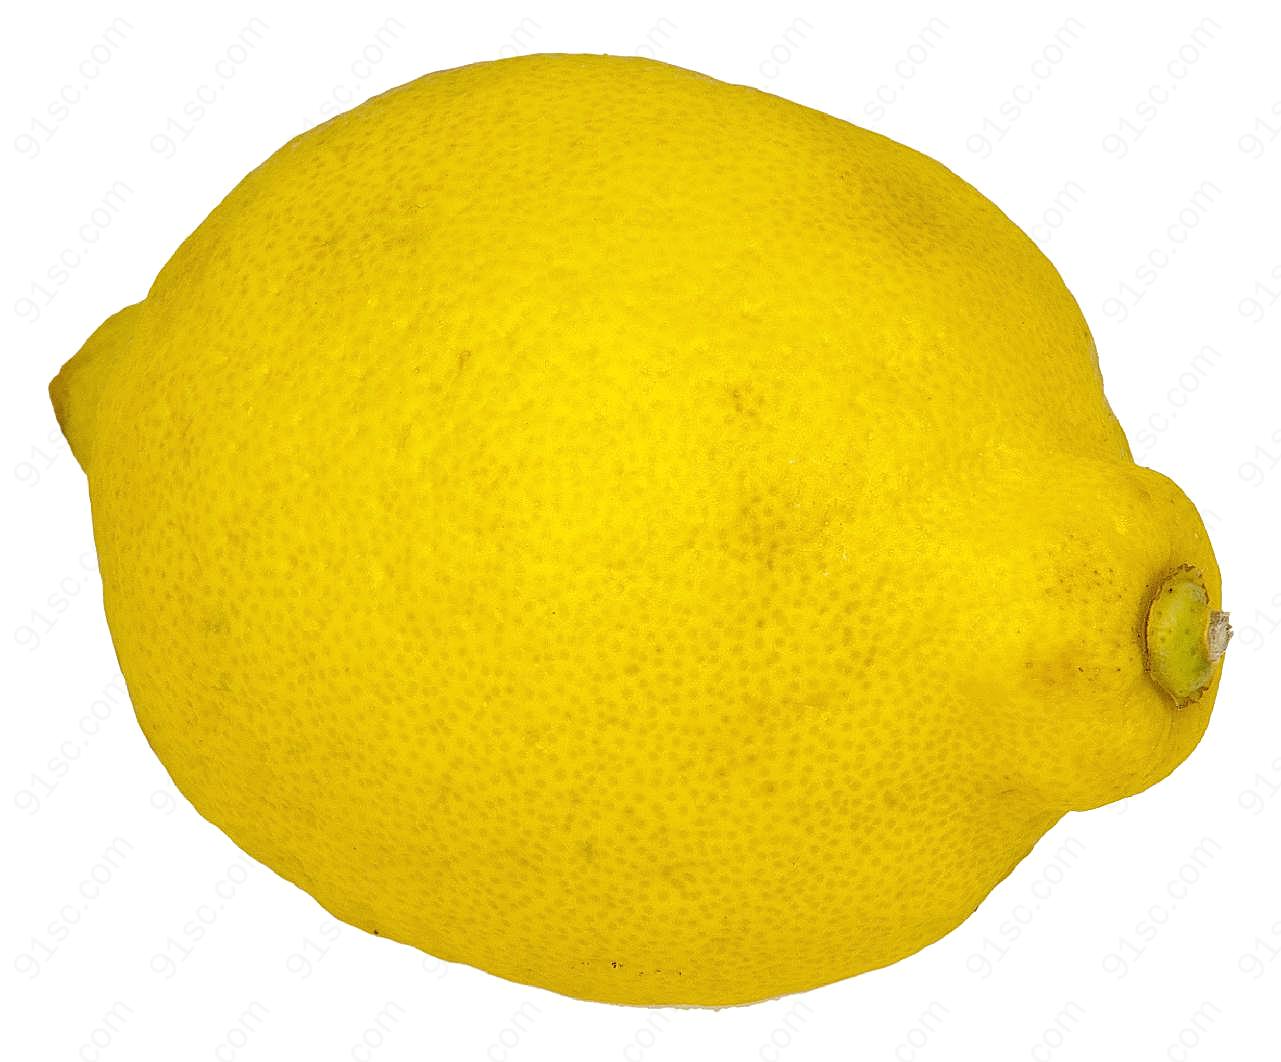 柠檬图片摄影